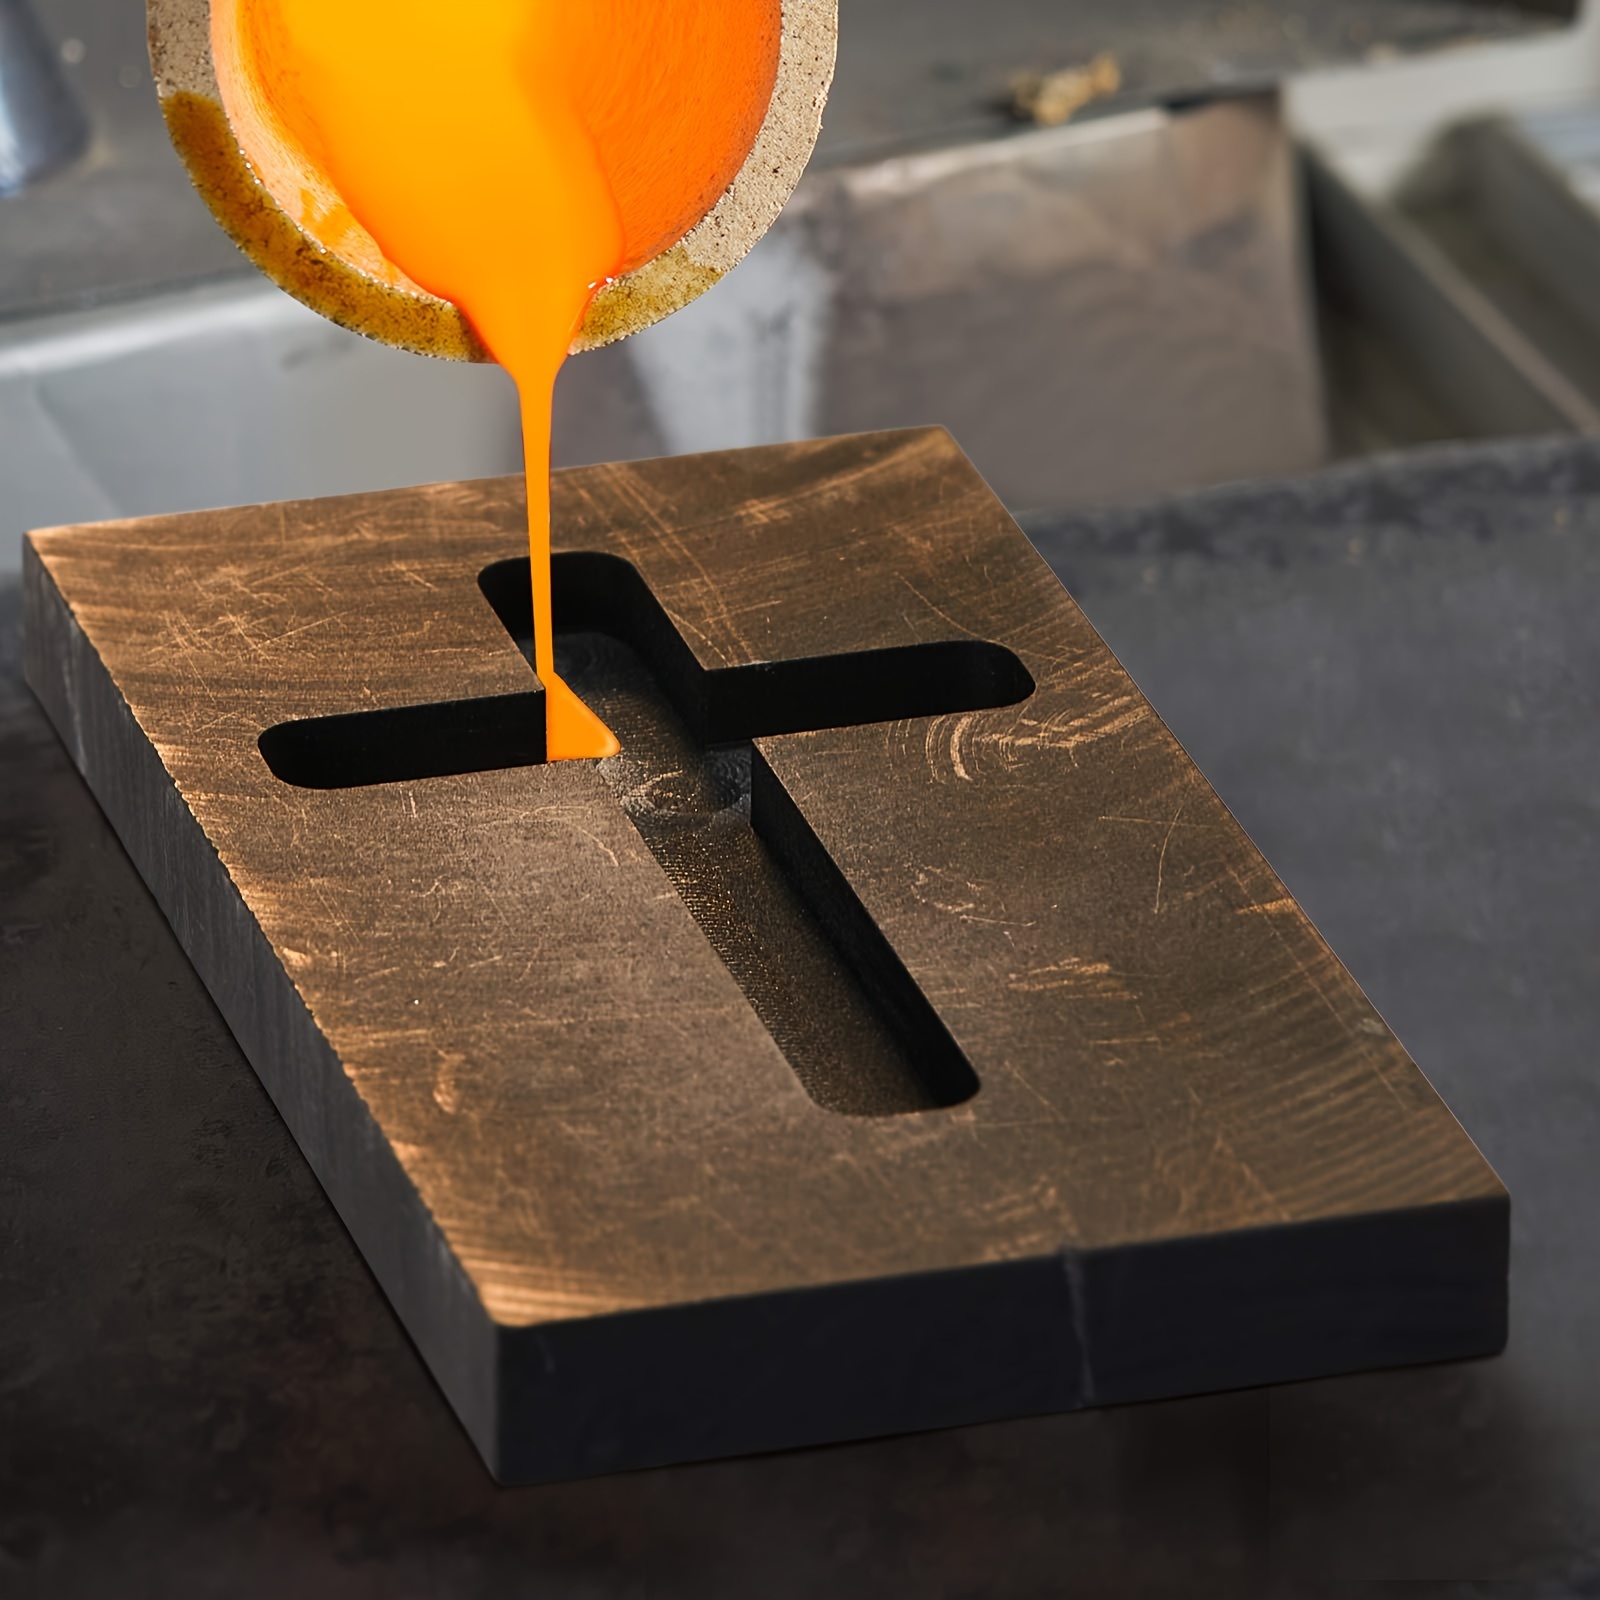 Crucible Mould Metal Melting Casting Refining Ingot Molds Graphite Ingot  Mold